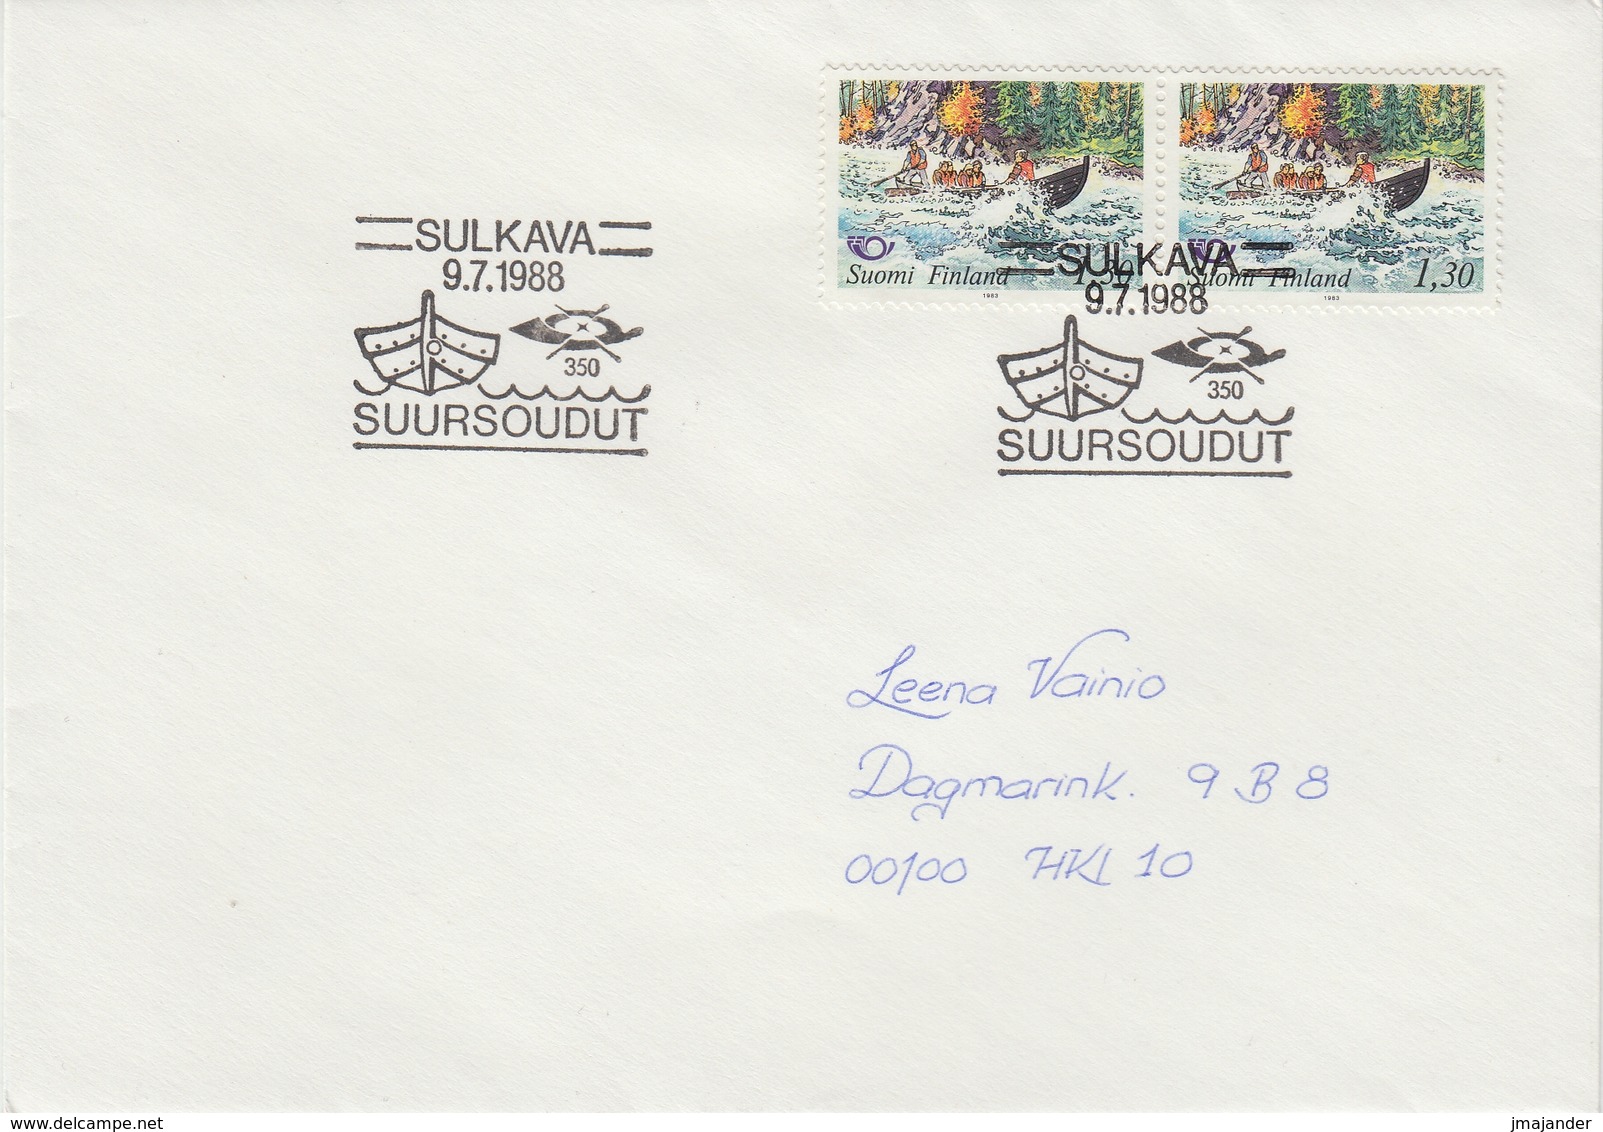 Finland 1988 - Sulkava Rowing Race - Commemorative Postmark - Rudersport